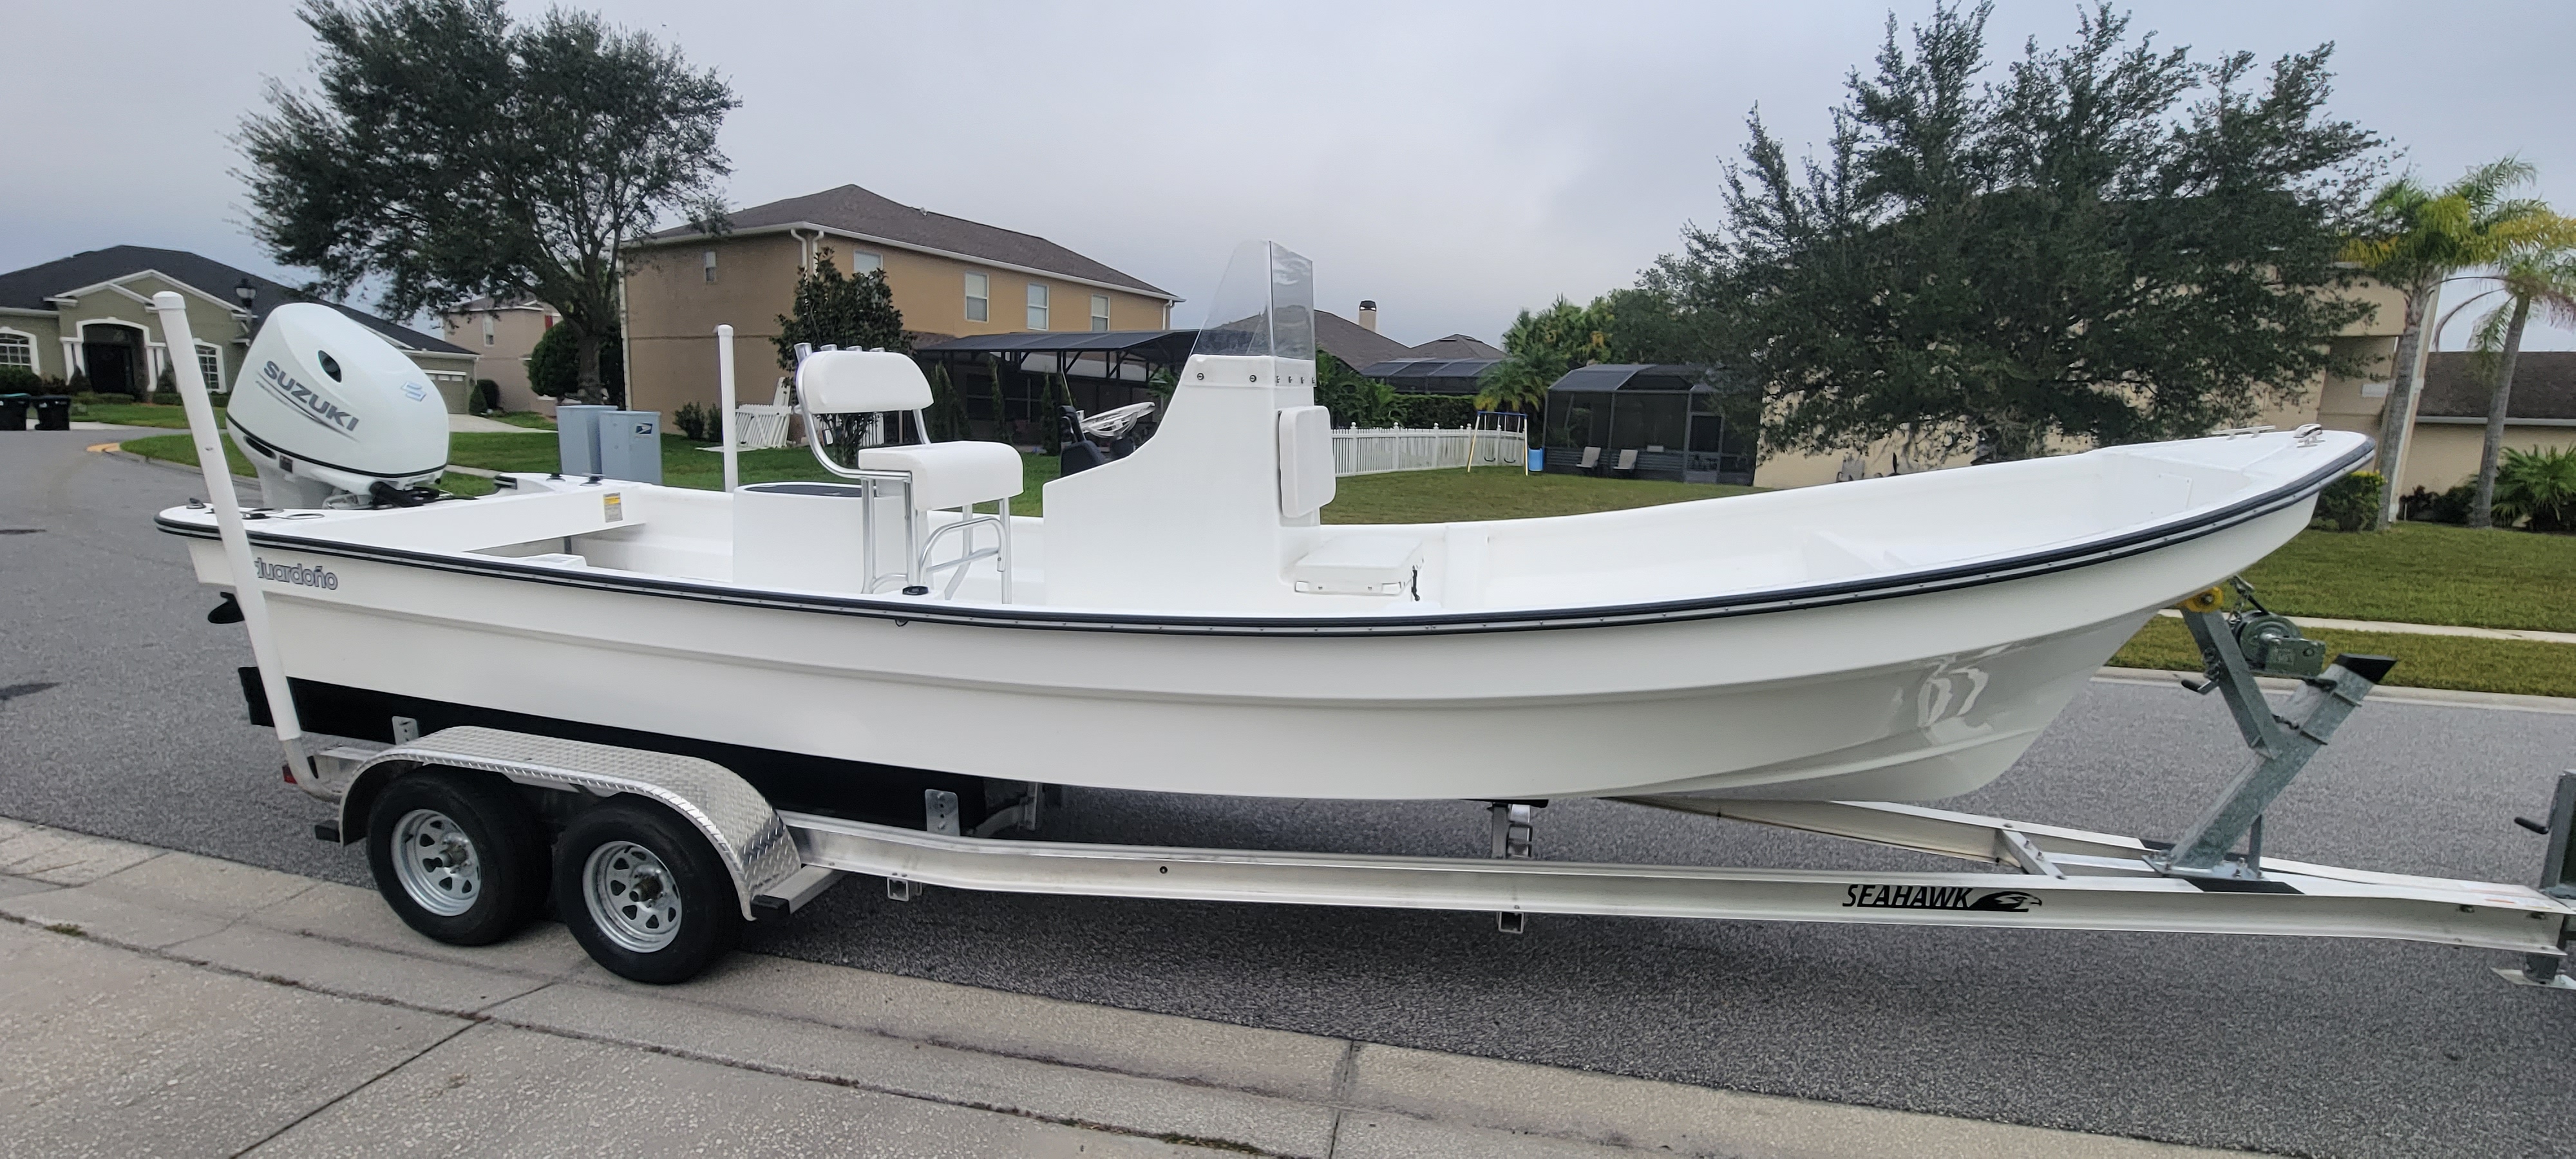 2022 25 foot Eduardono Corvina Panga Power boat for sale in Alafaya, FL - image 1 